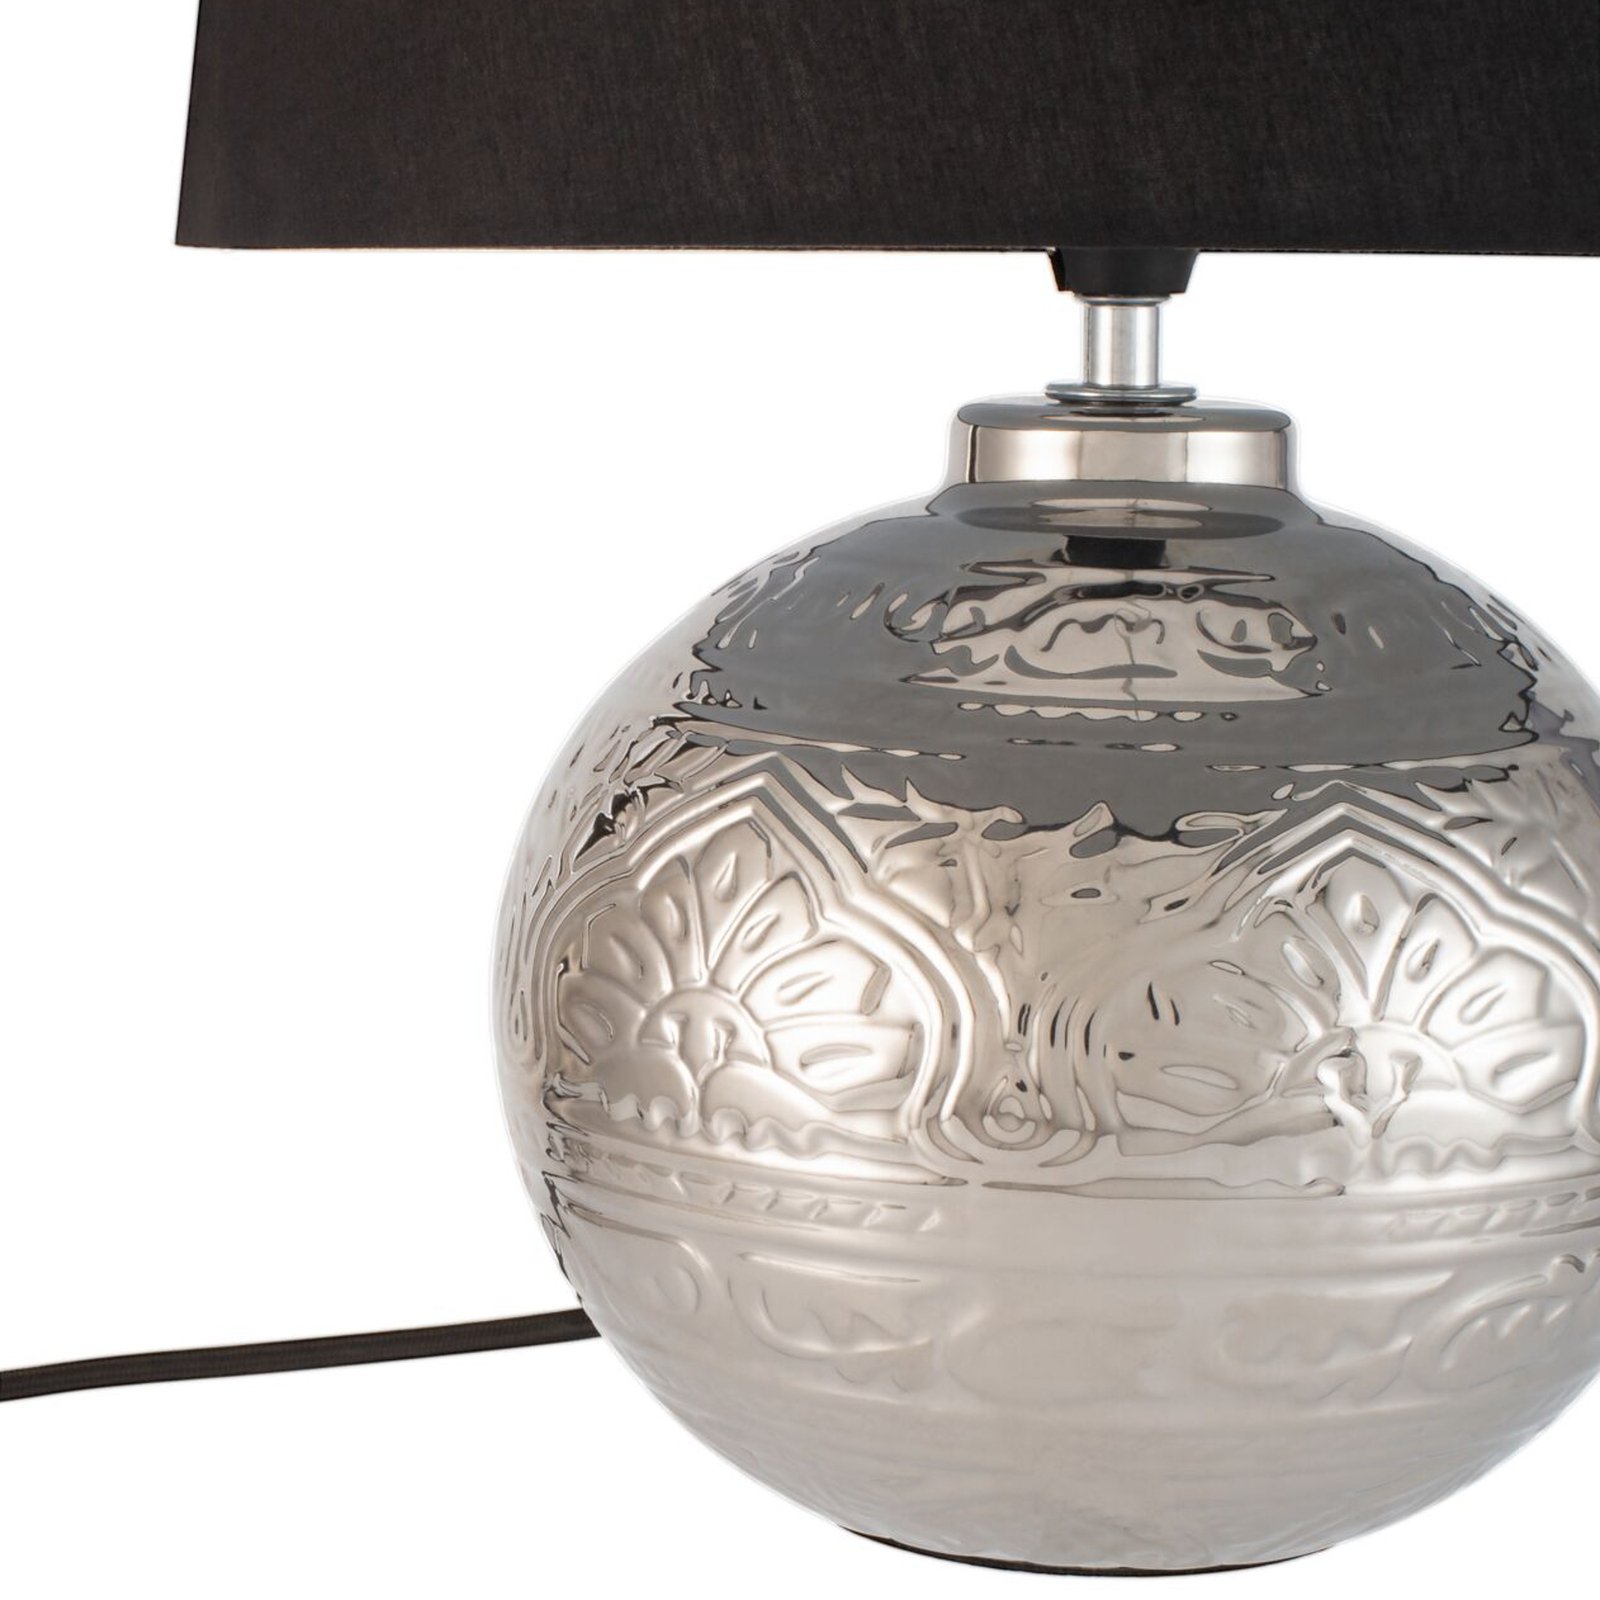 Pauleen Touch of Silver stolná lampa keramický